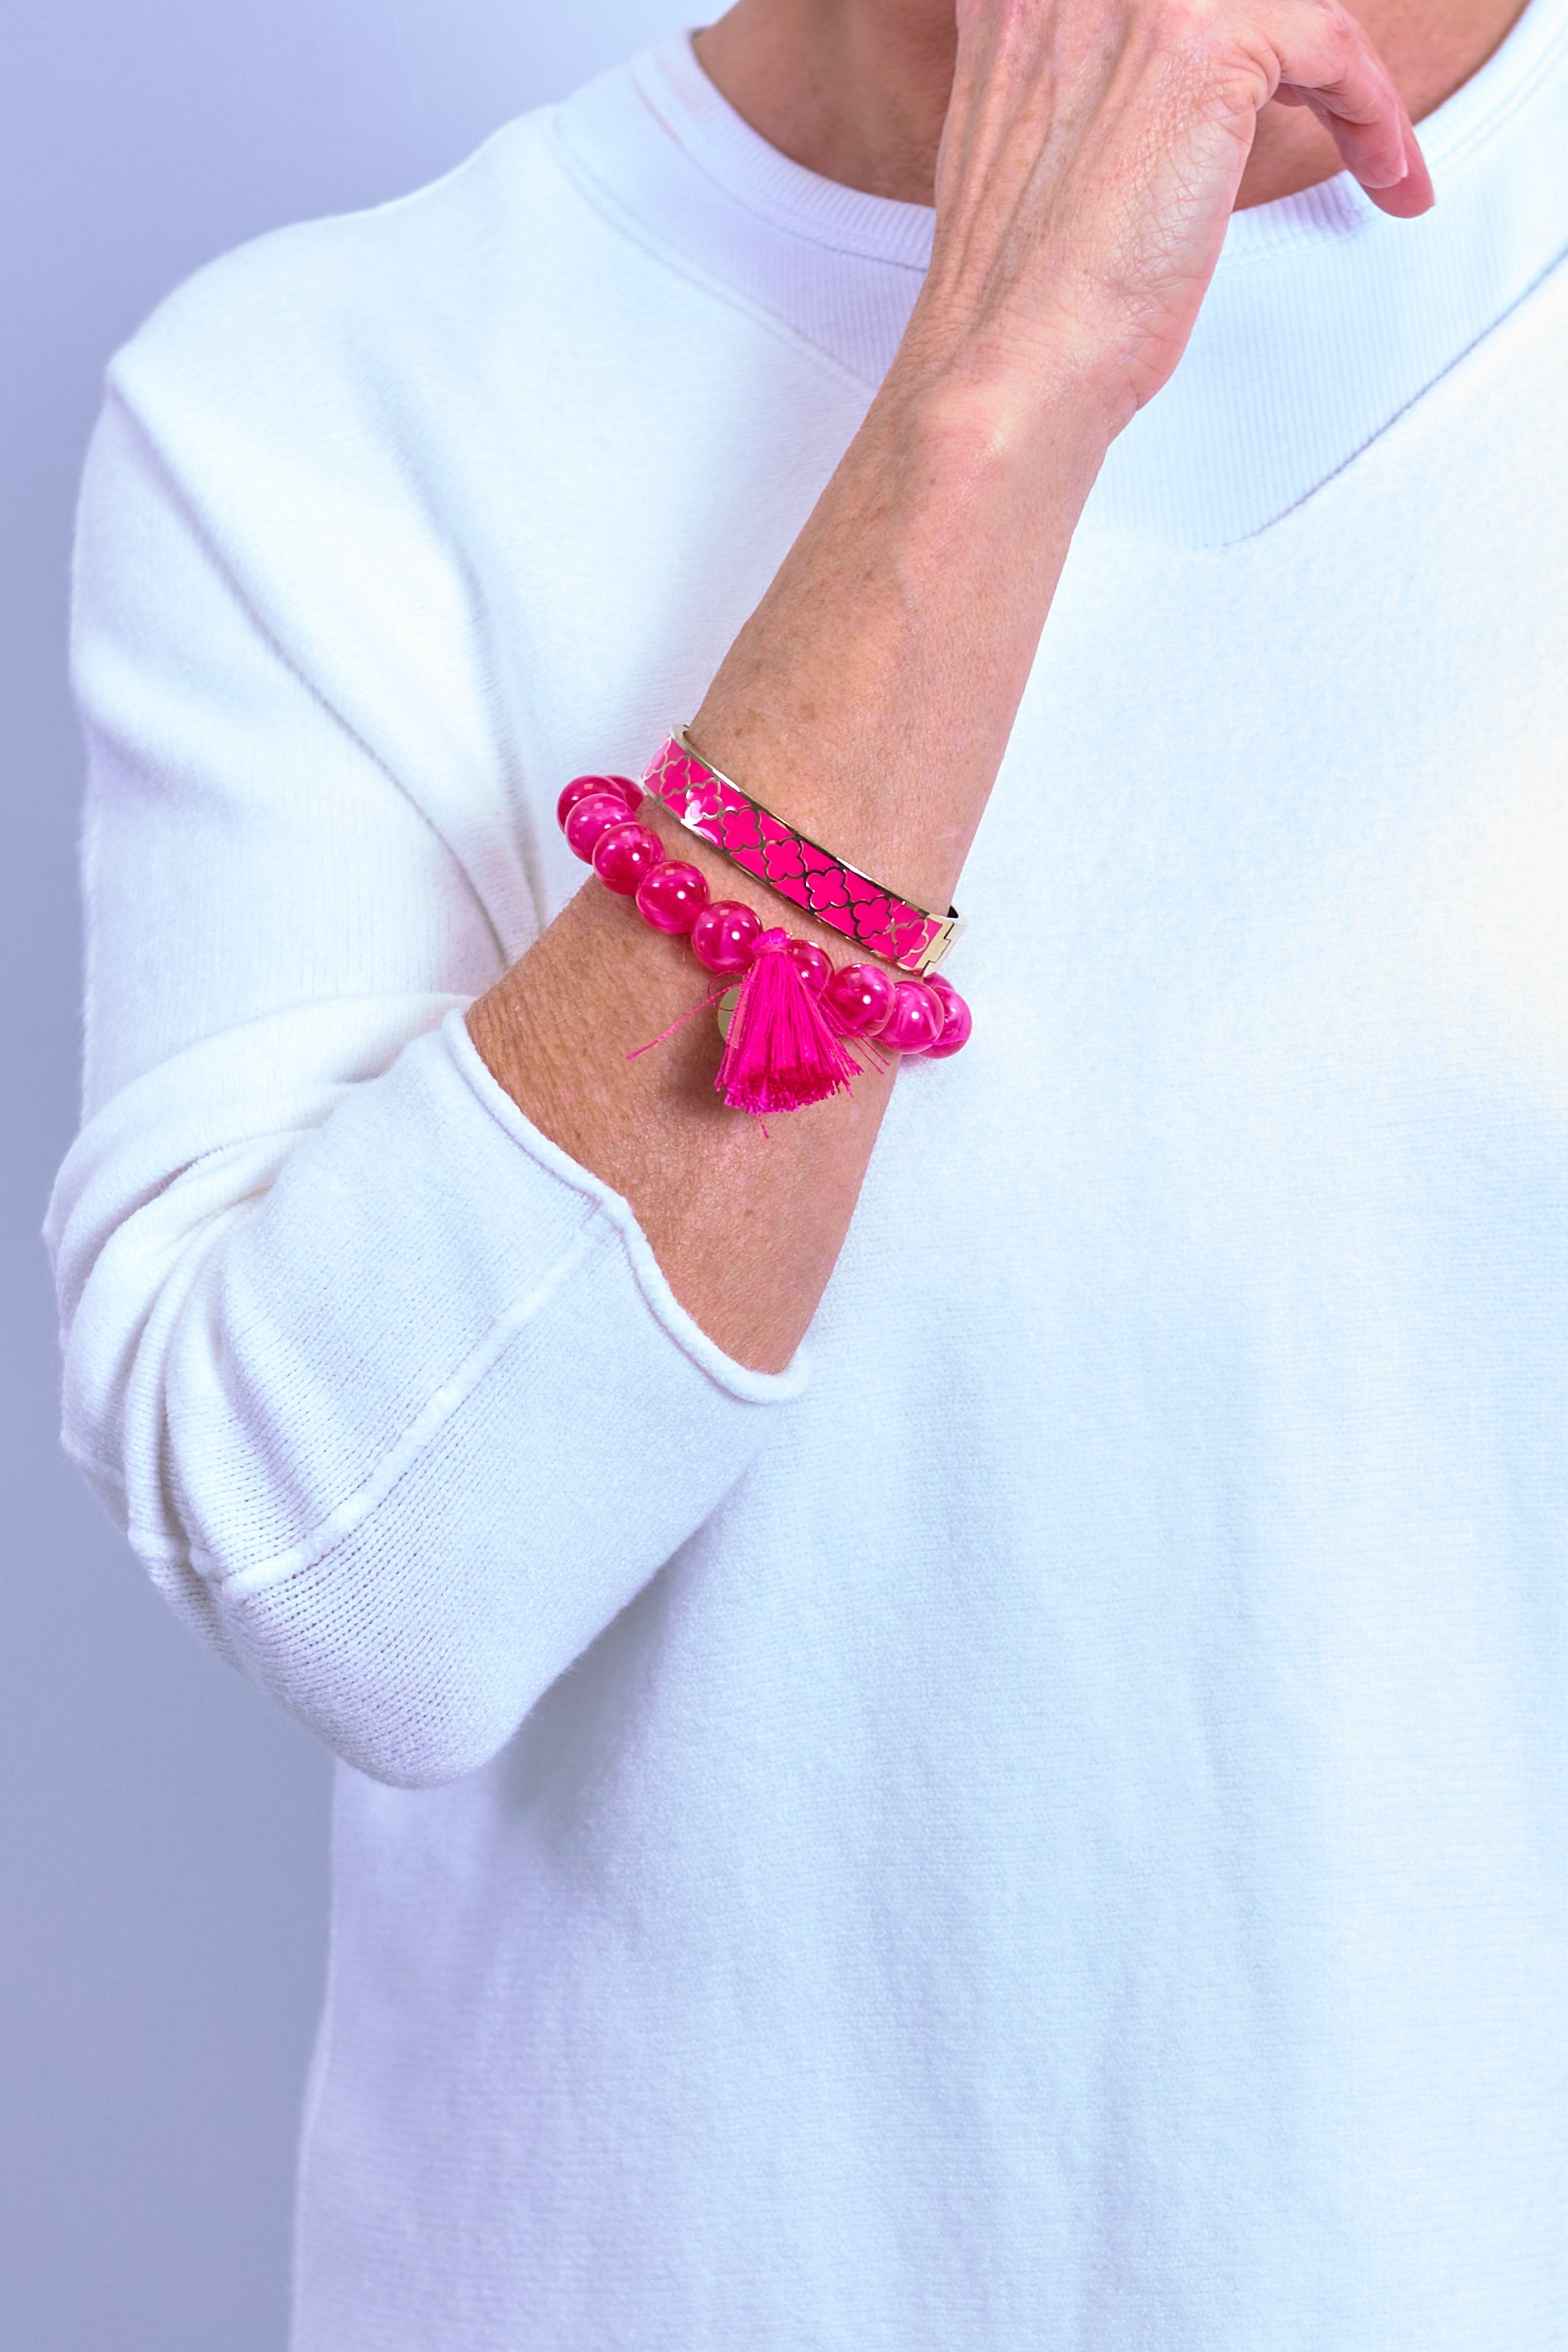 Pearl bracelet with tassel, pink-marbled